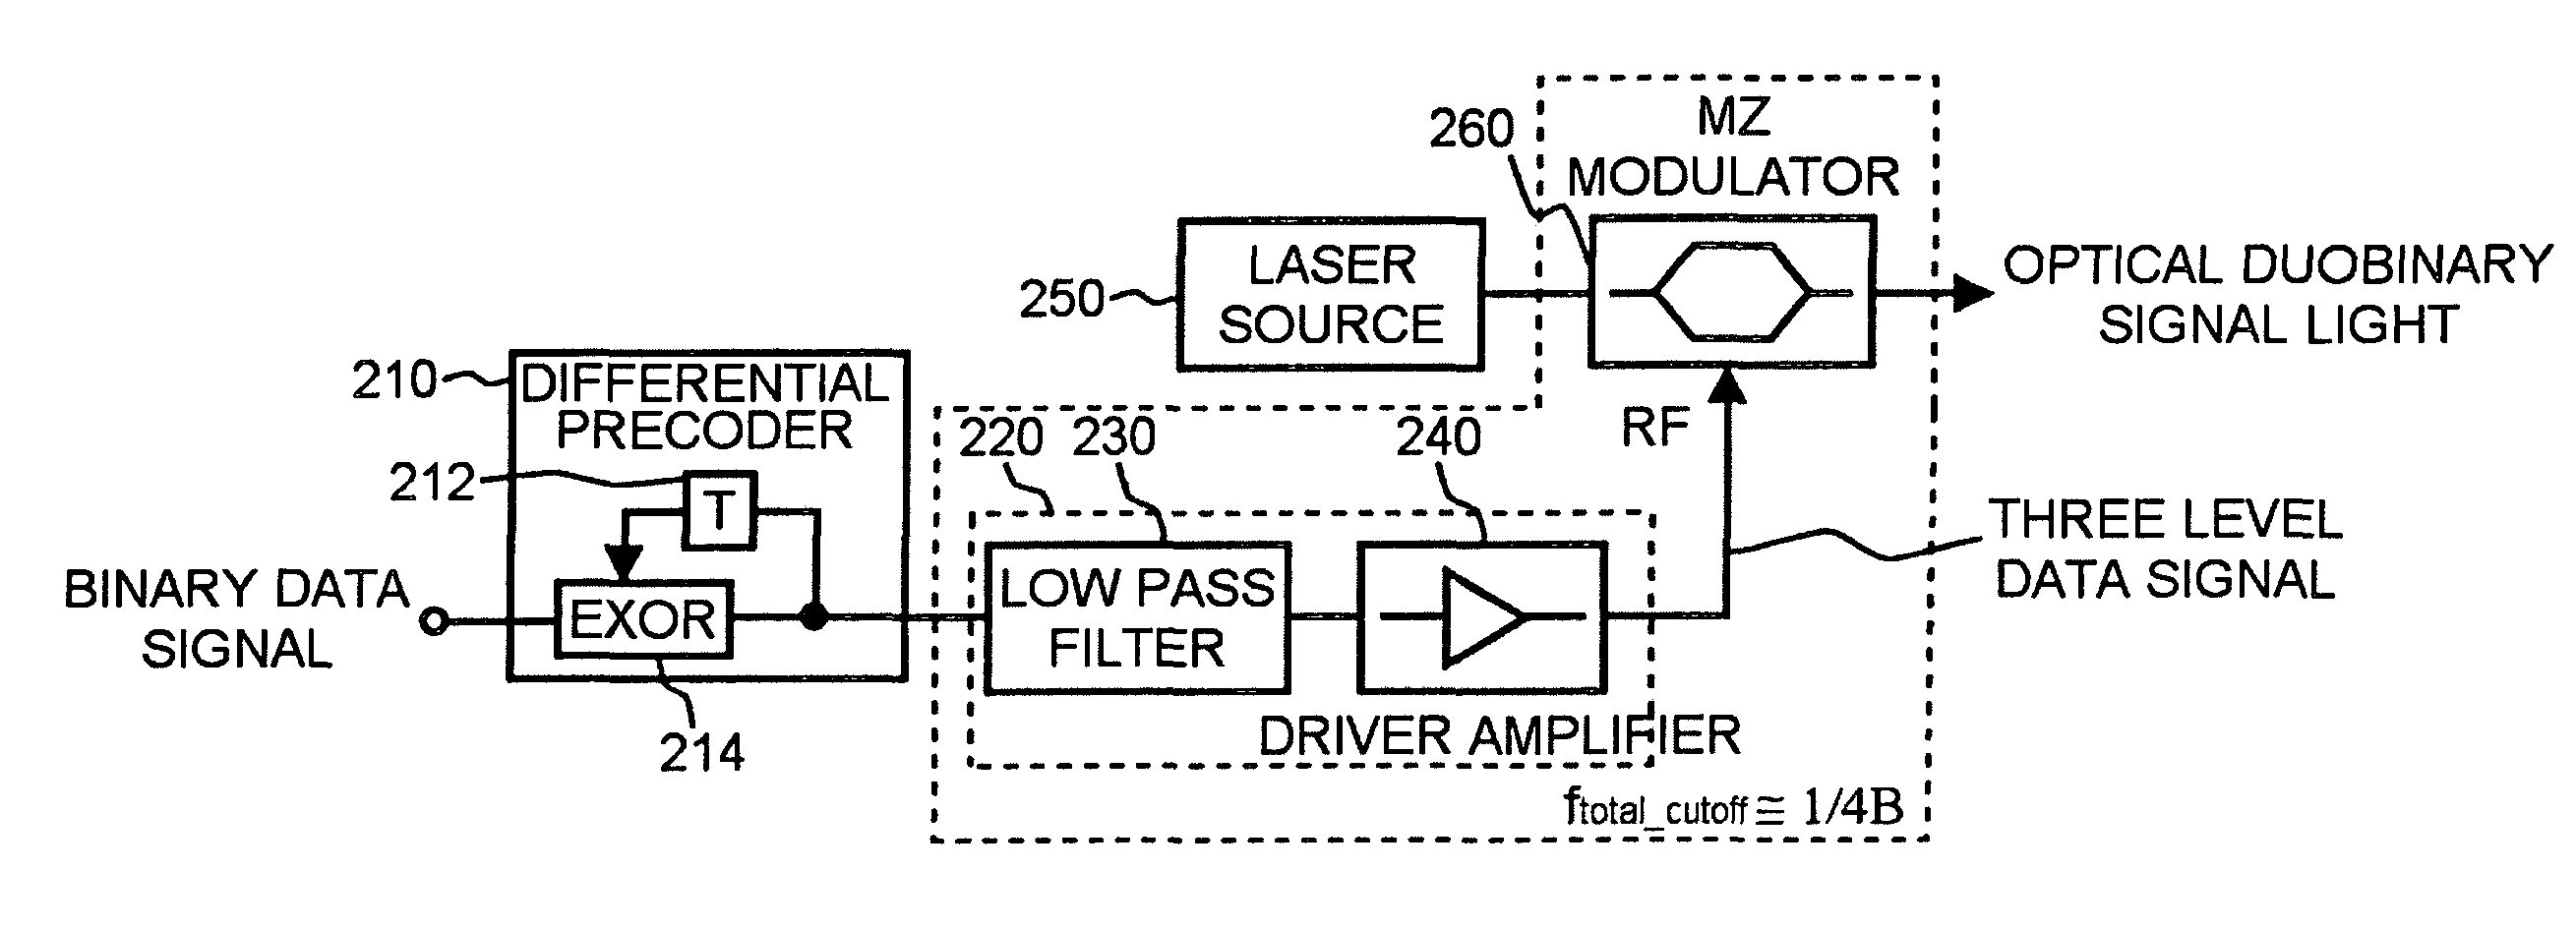 Duobinary optical transmitter